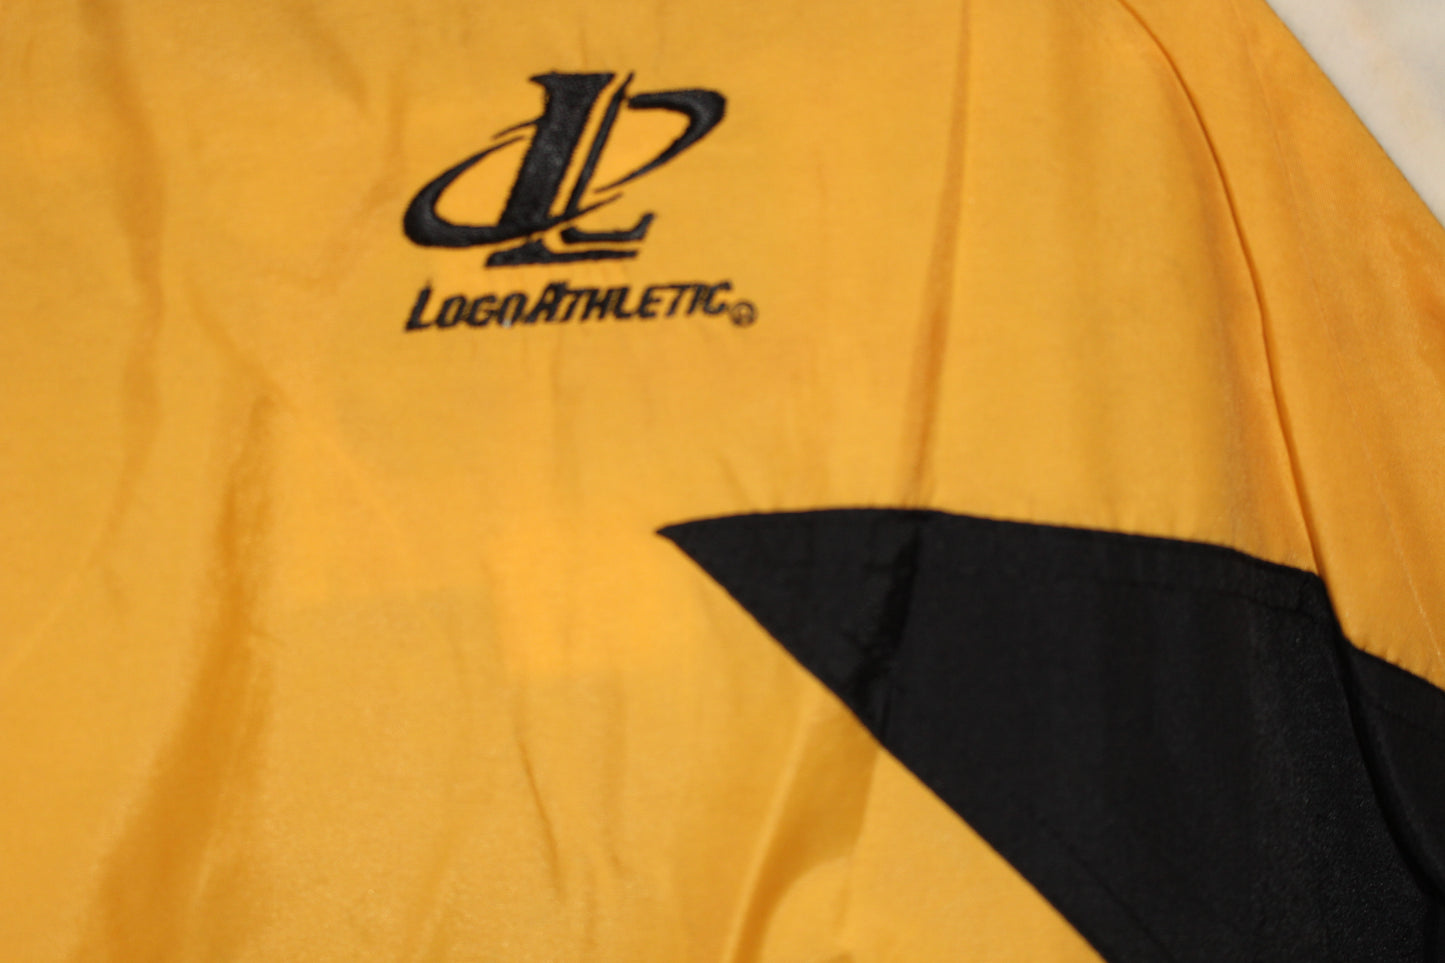 Pittsburgh Penguins Logo Athletic Sharktooth (L)